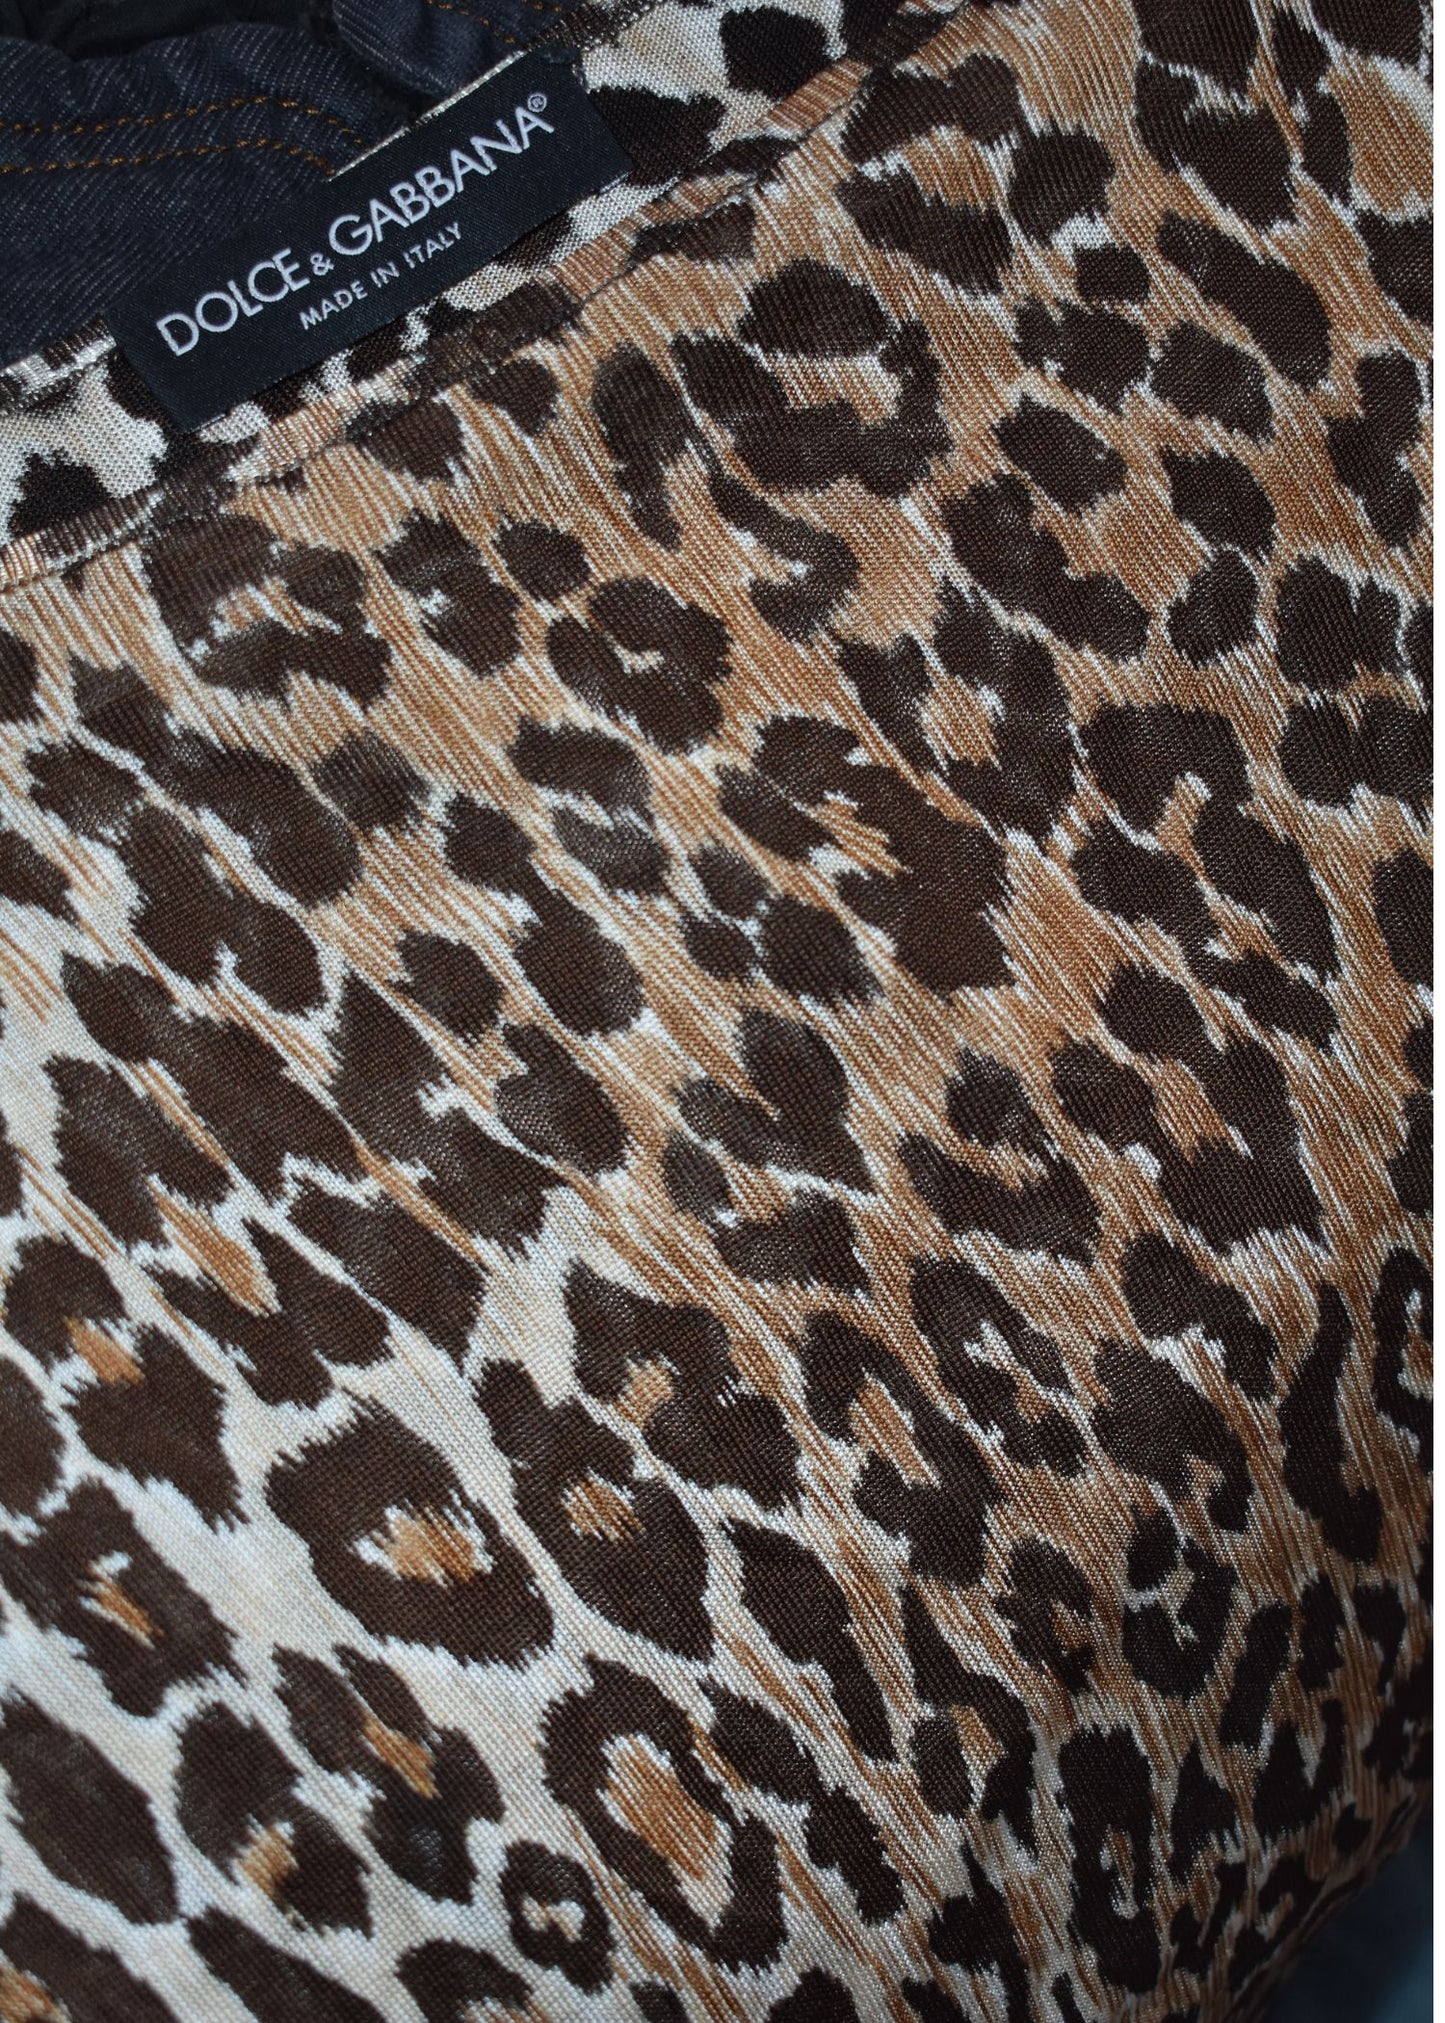 Dolce & Gabbana Cheetah Print Lace Up Top